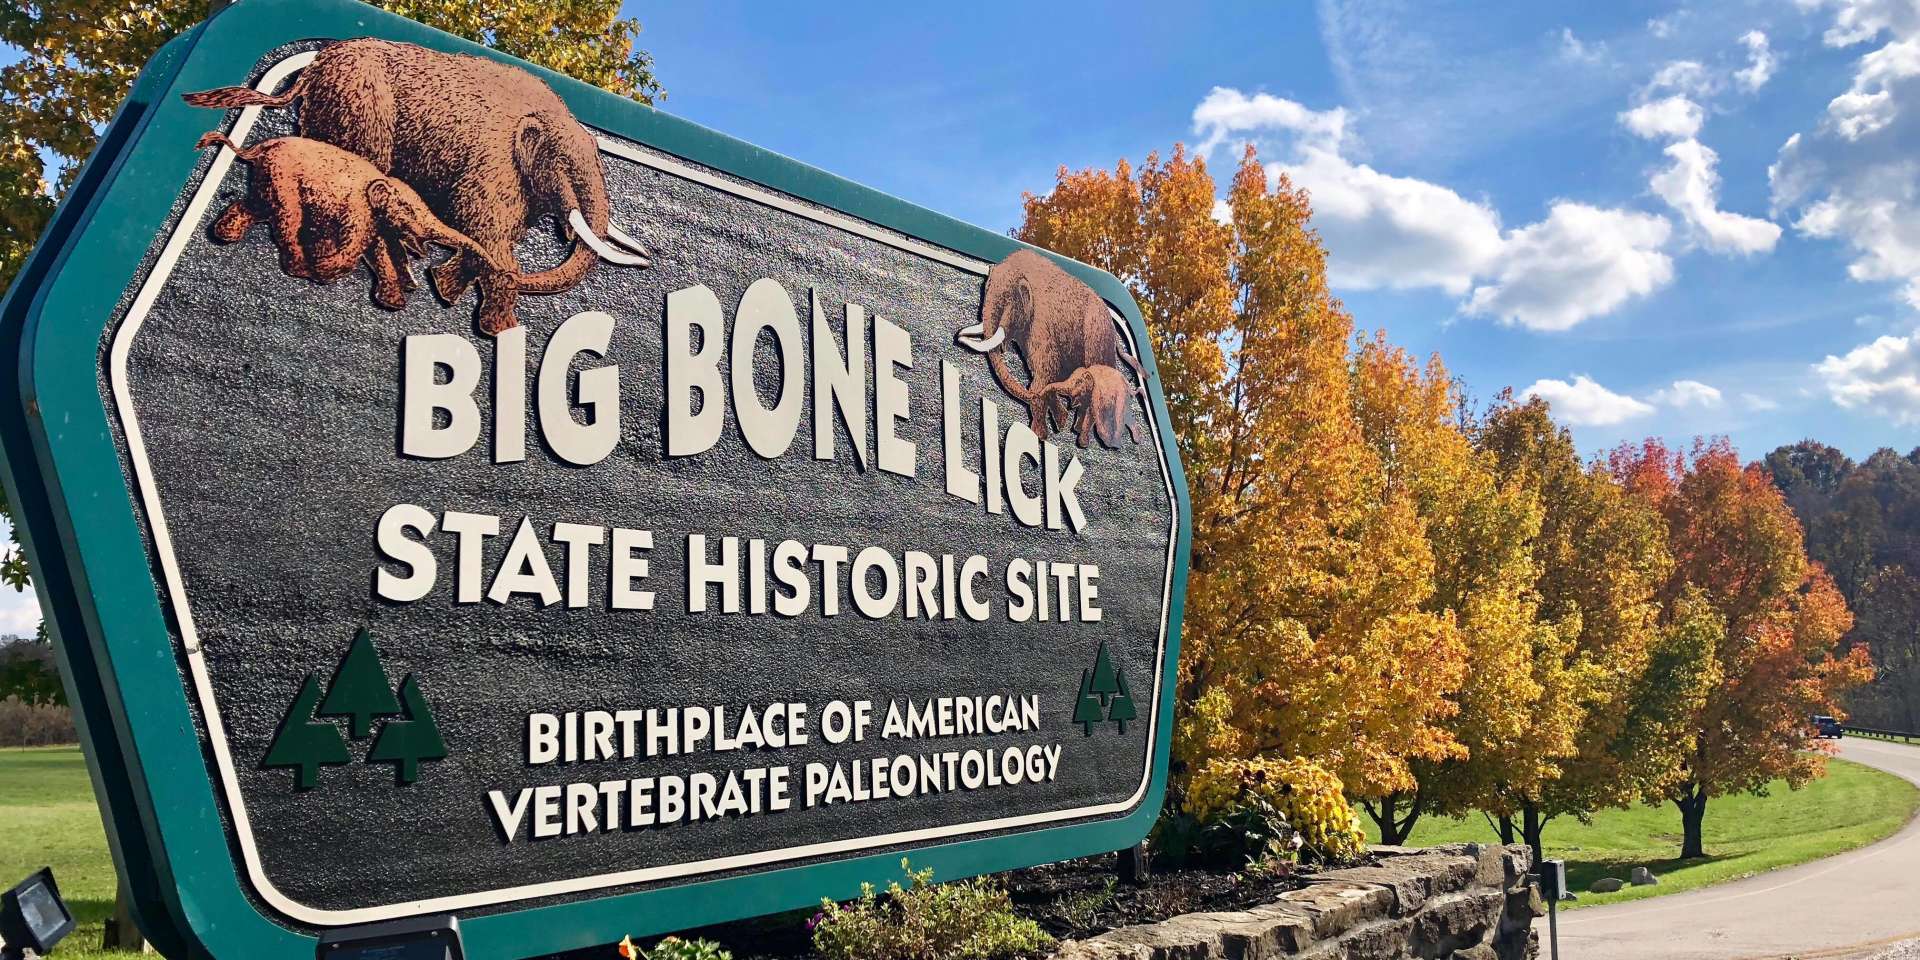 Big Bone Lick State Historic Site sign